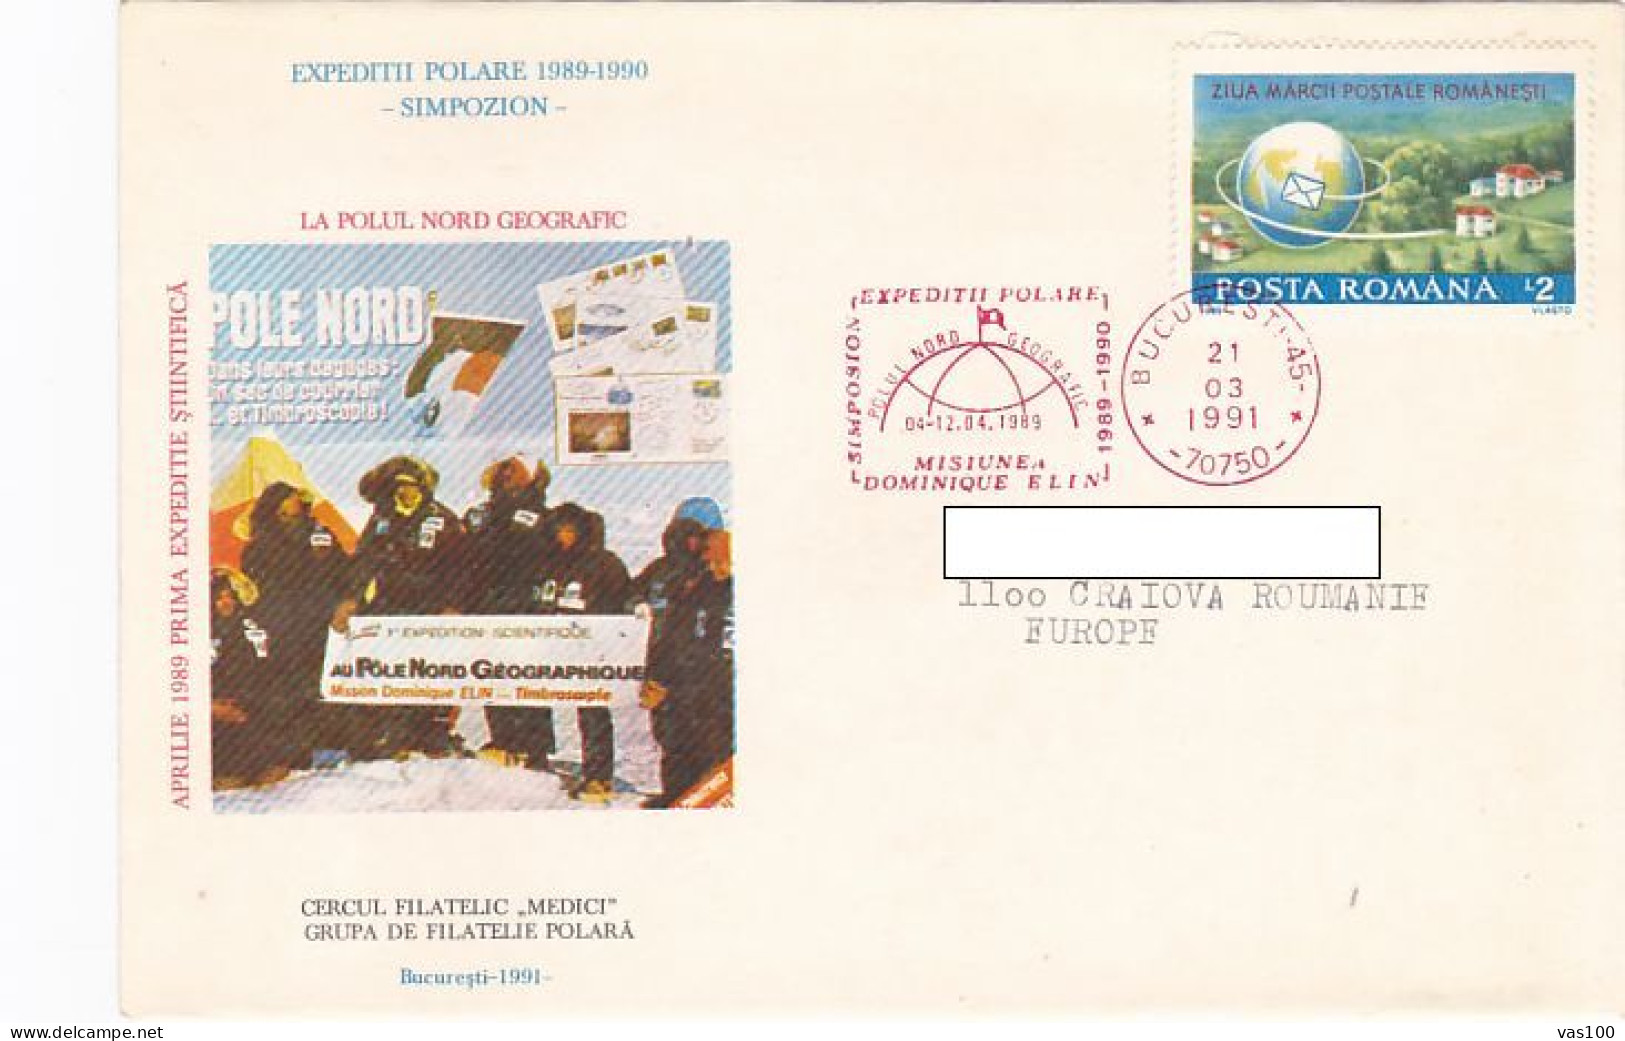 NORTH POLE, ARCTIC EXPEDITION, DOMINIQUE ELIN AT NORTH POLE, SPECIAL COVER, 1991, ROMANIA - Arktis Expeditionen